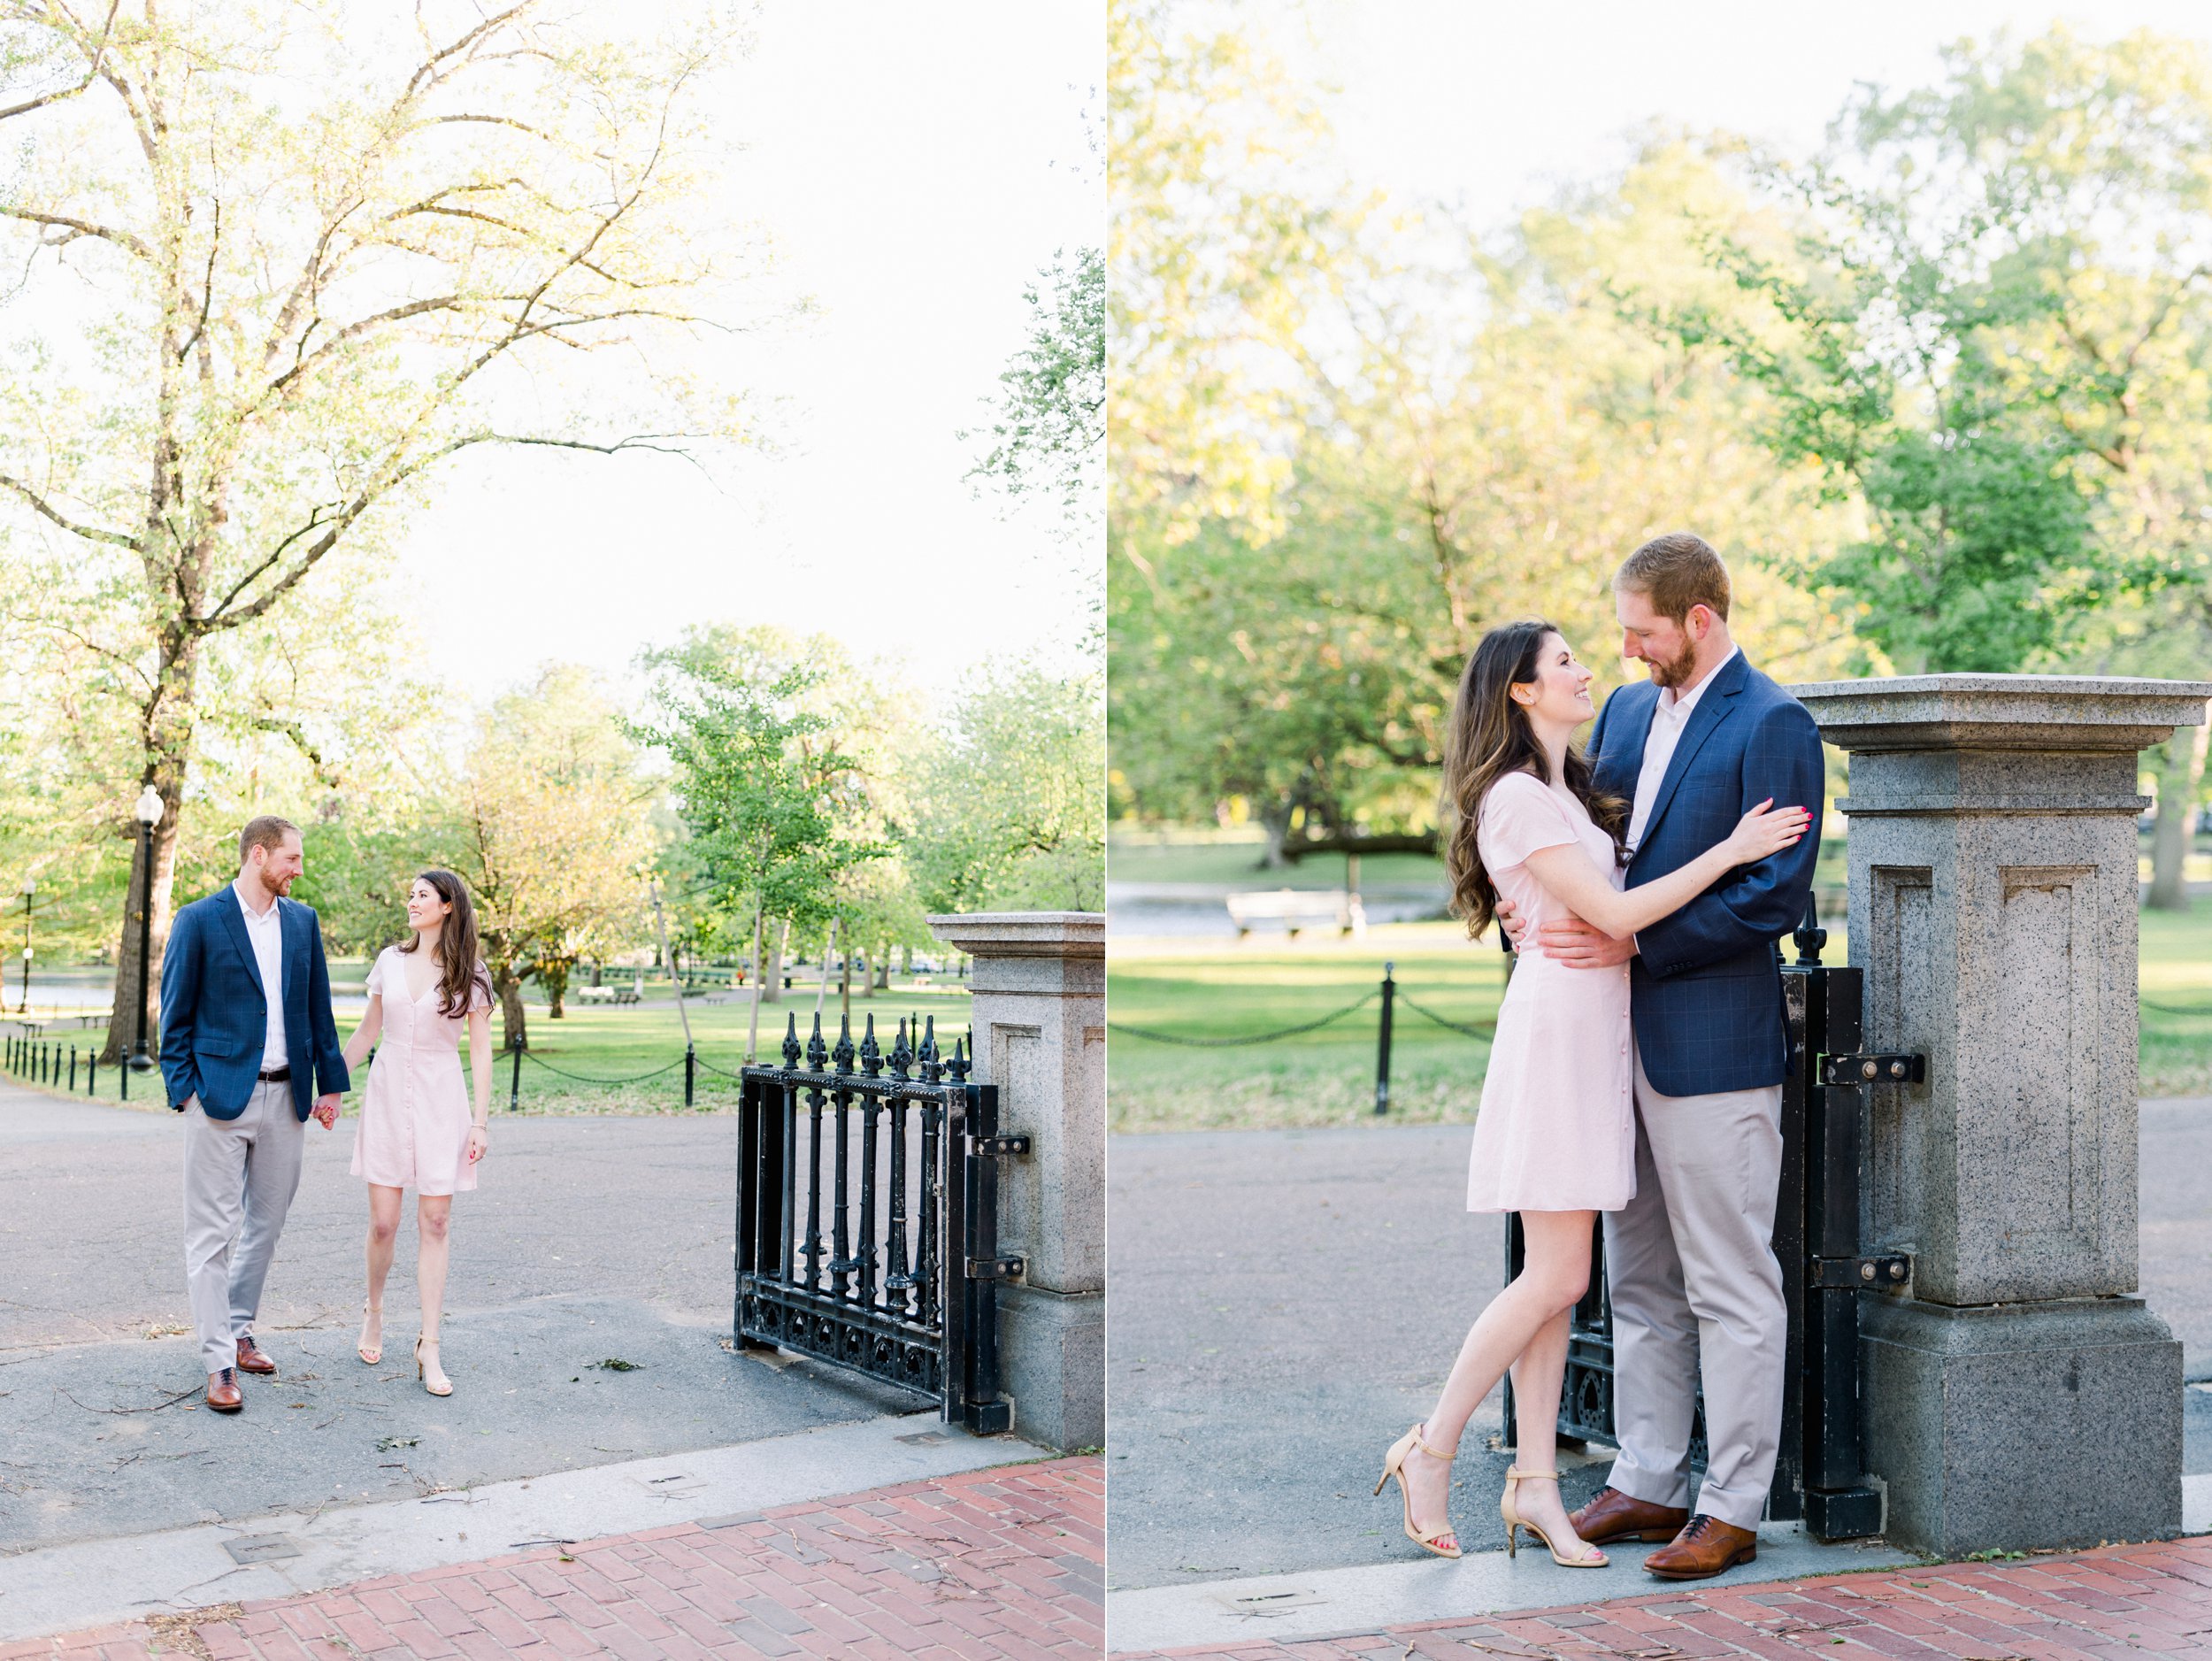 Boston Public Garden Sunrise Engagement Session | Pale pink dress | blue blazer | Springtime engagement in Boston